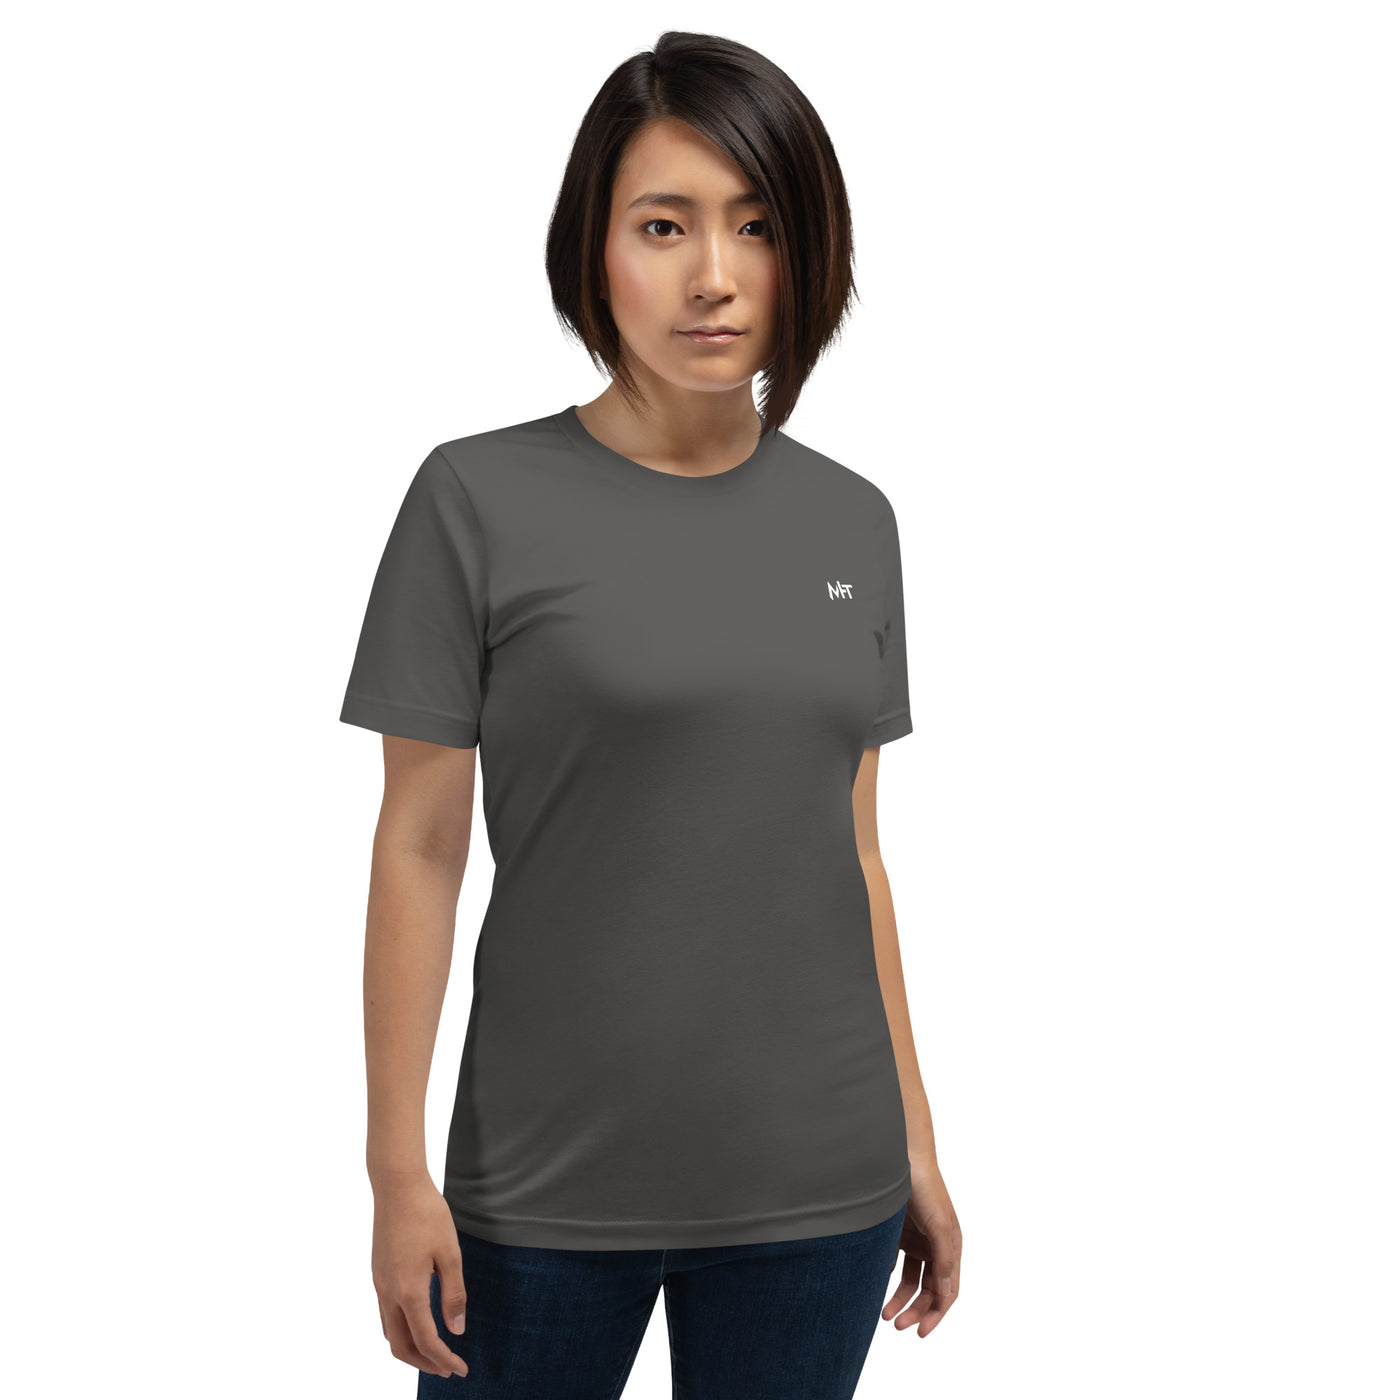 I am a Bitcoin Girl, the sweetest - Unisex t-shirt ( Back Print )